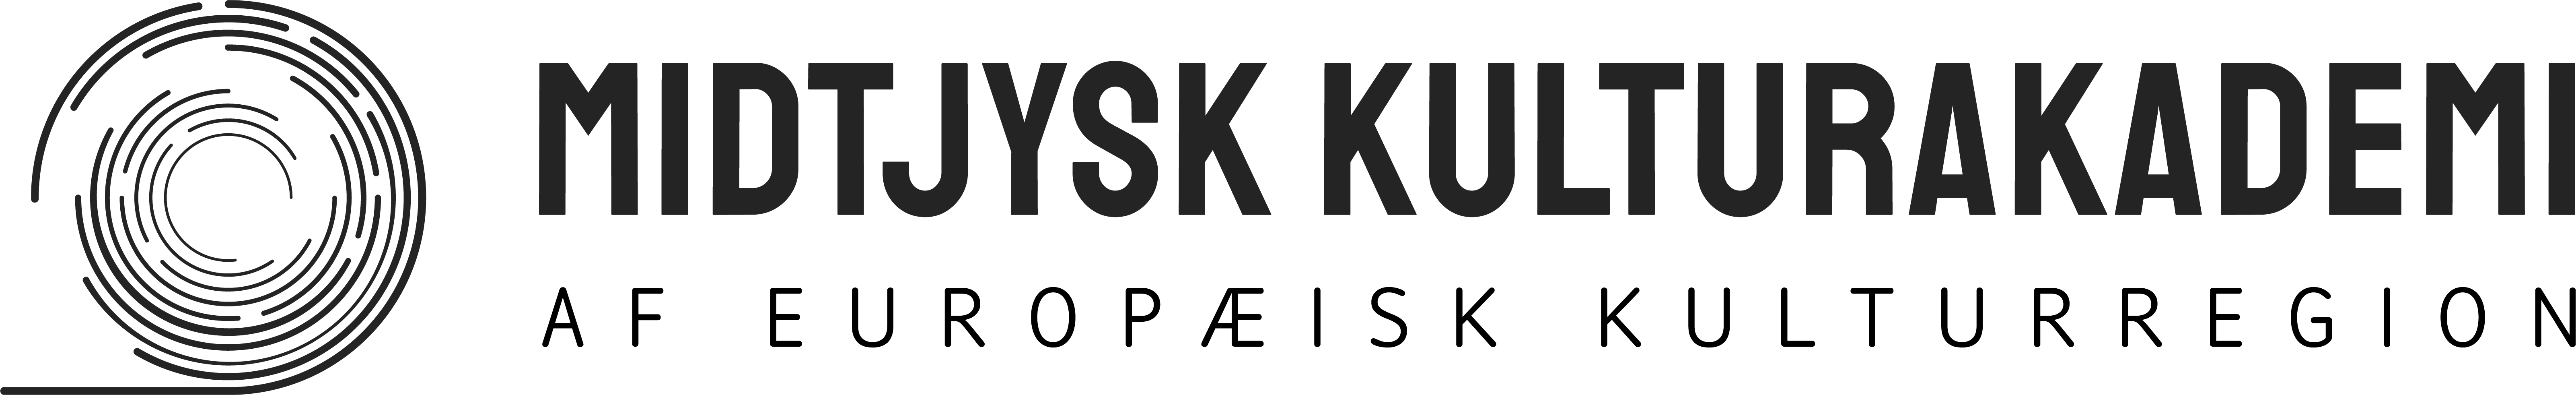 MKA_logo_black-4